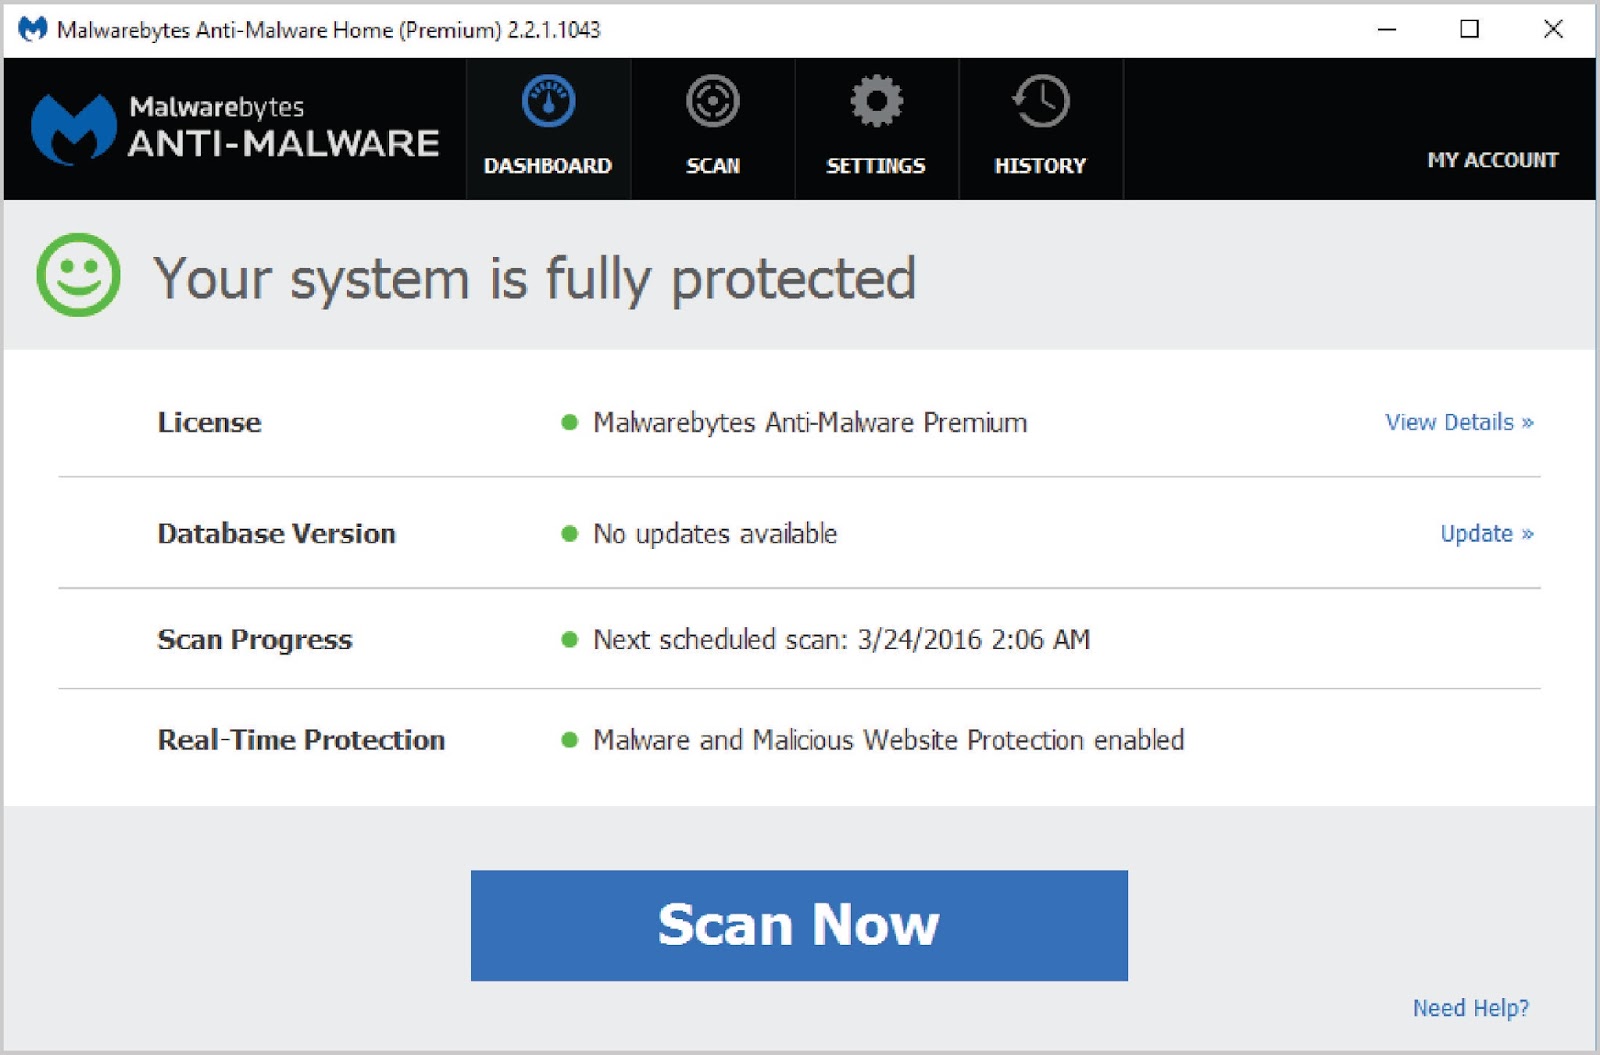 malwarebytes anti malware premium lifetime license